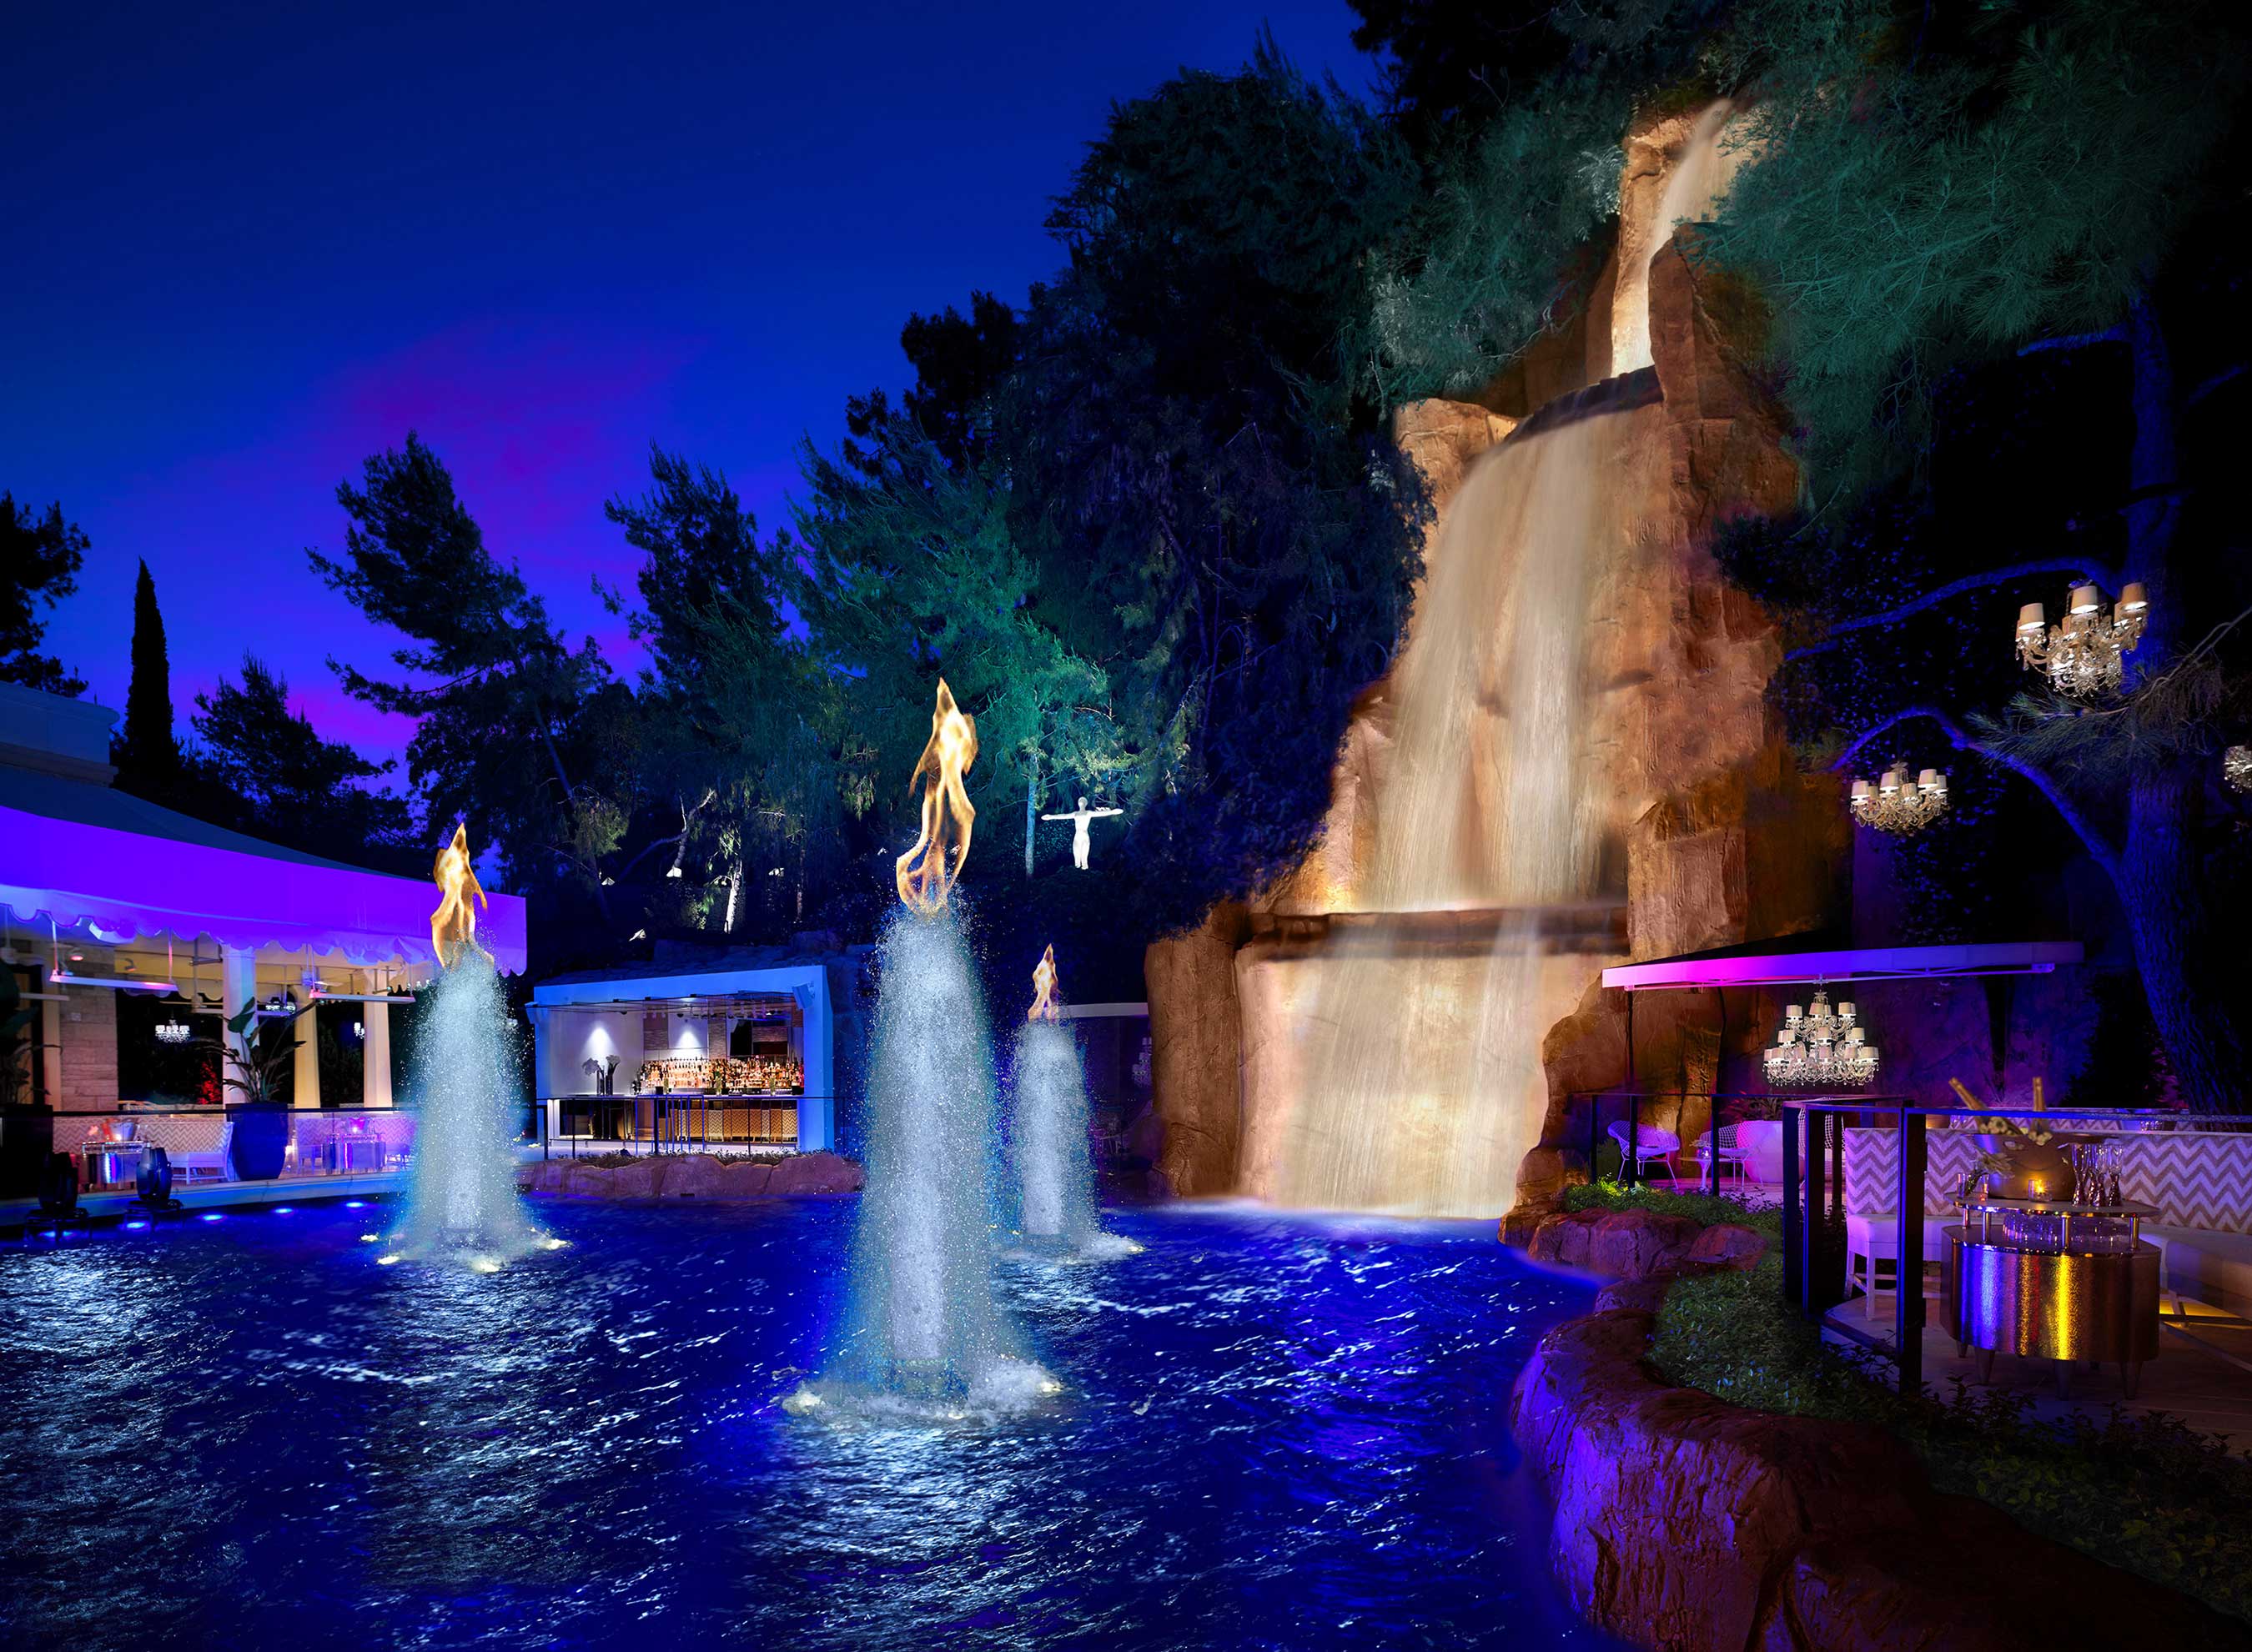 94-foot waterfall, fountain and pyrotechnics show at Intrigue Nightclub in Wynn Las Vegas (photo credit: Barbara Kraft)